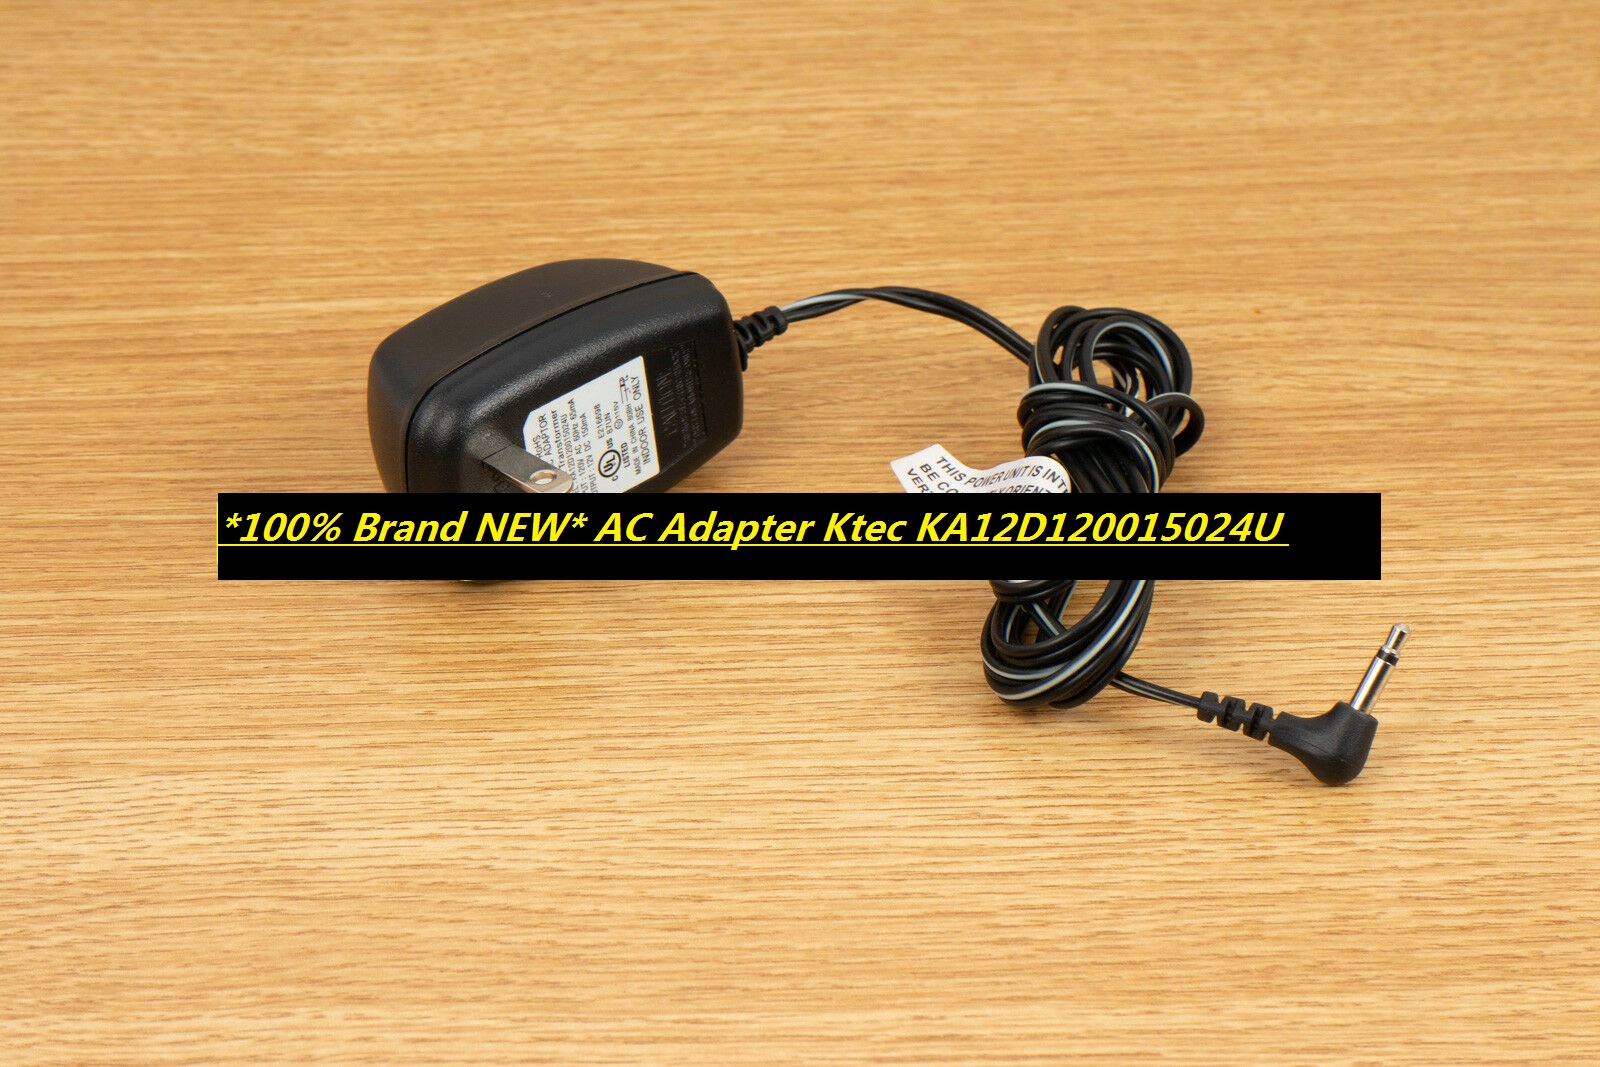 *100% Brand NEW* AC Adapter Ktec KA12D120015024U Power Supply - Click Image to Close